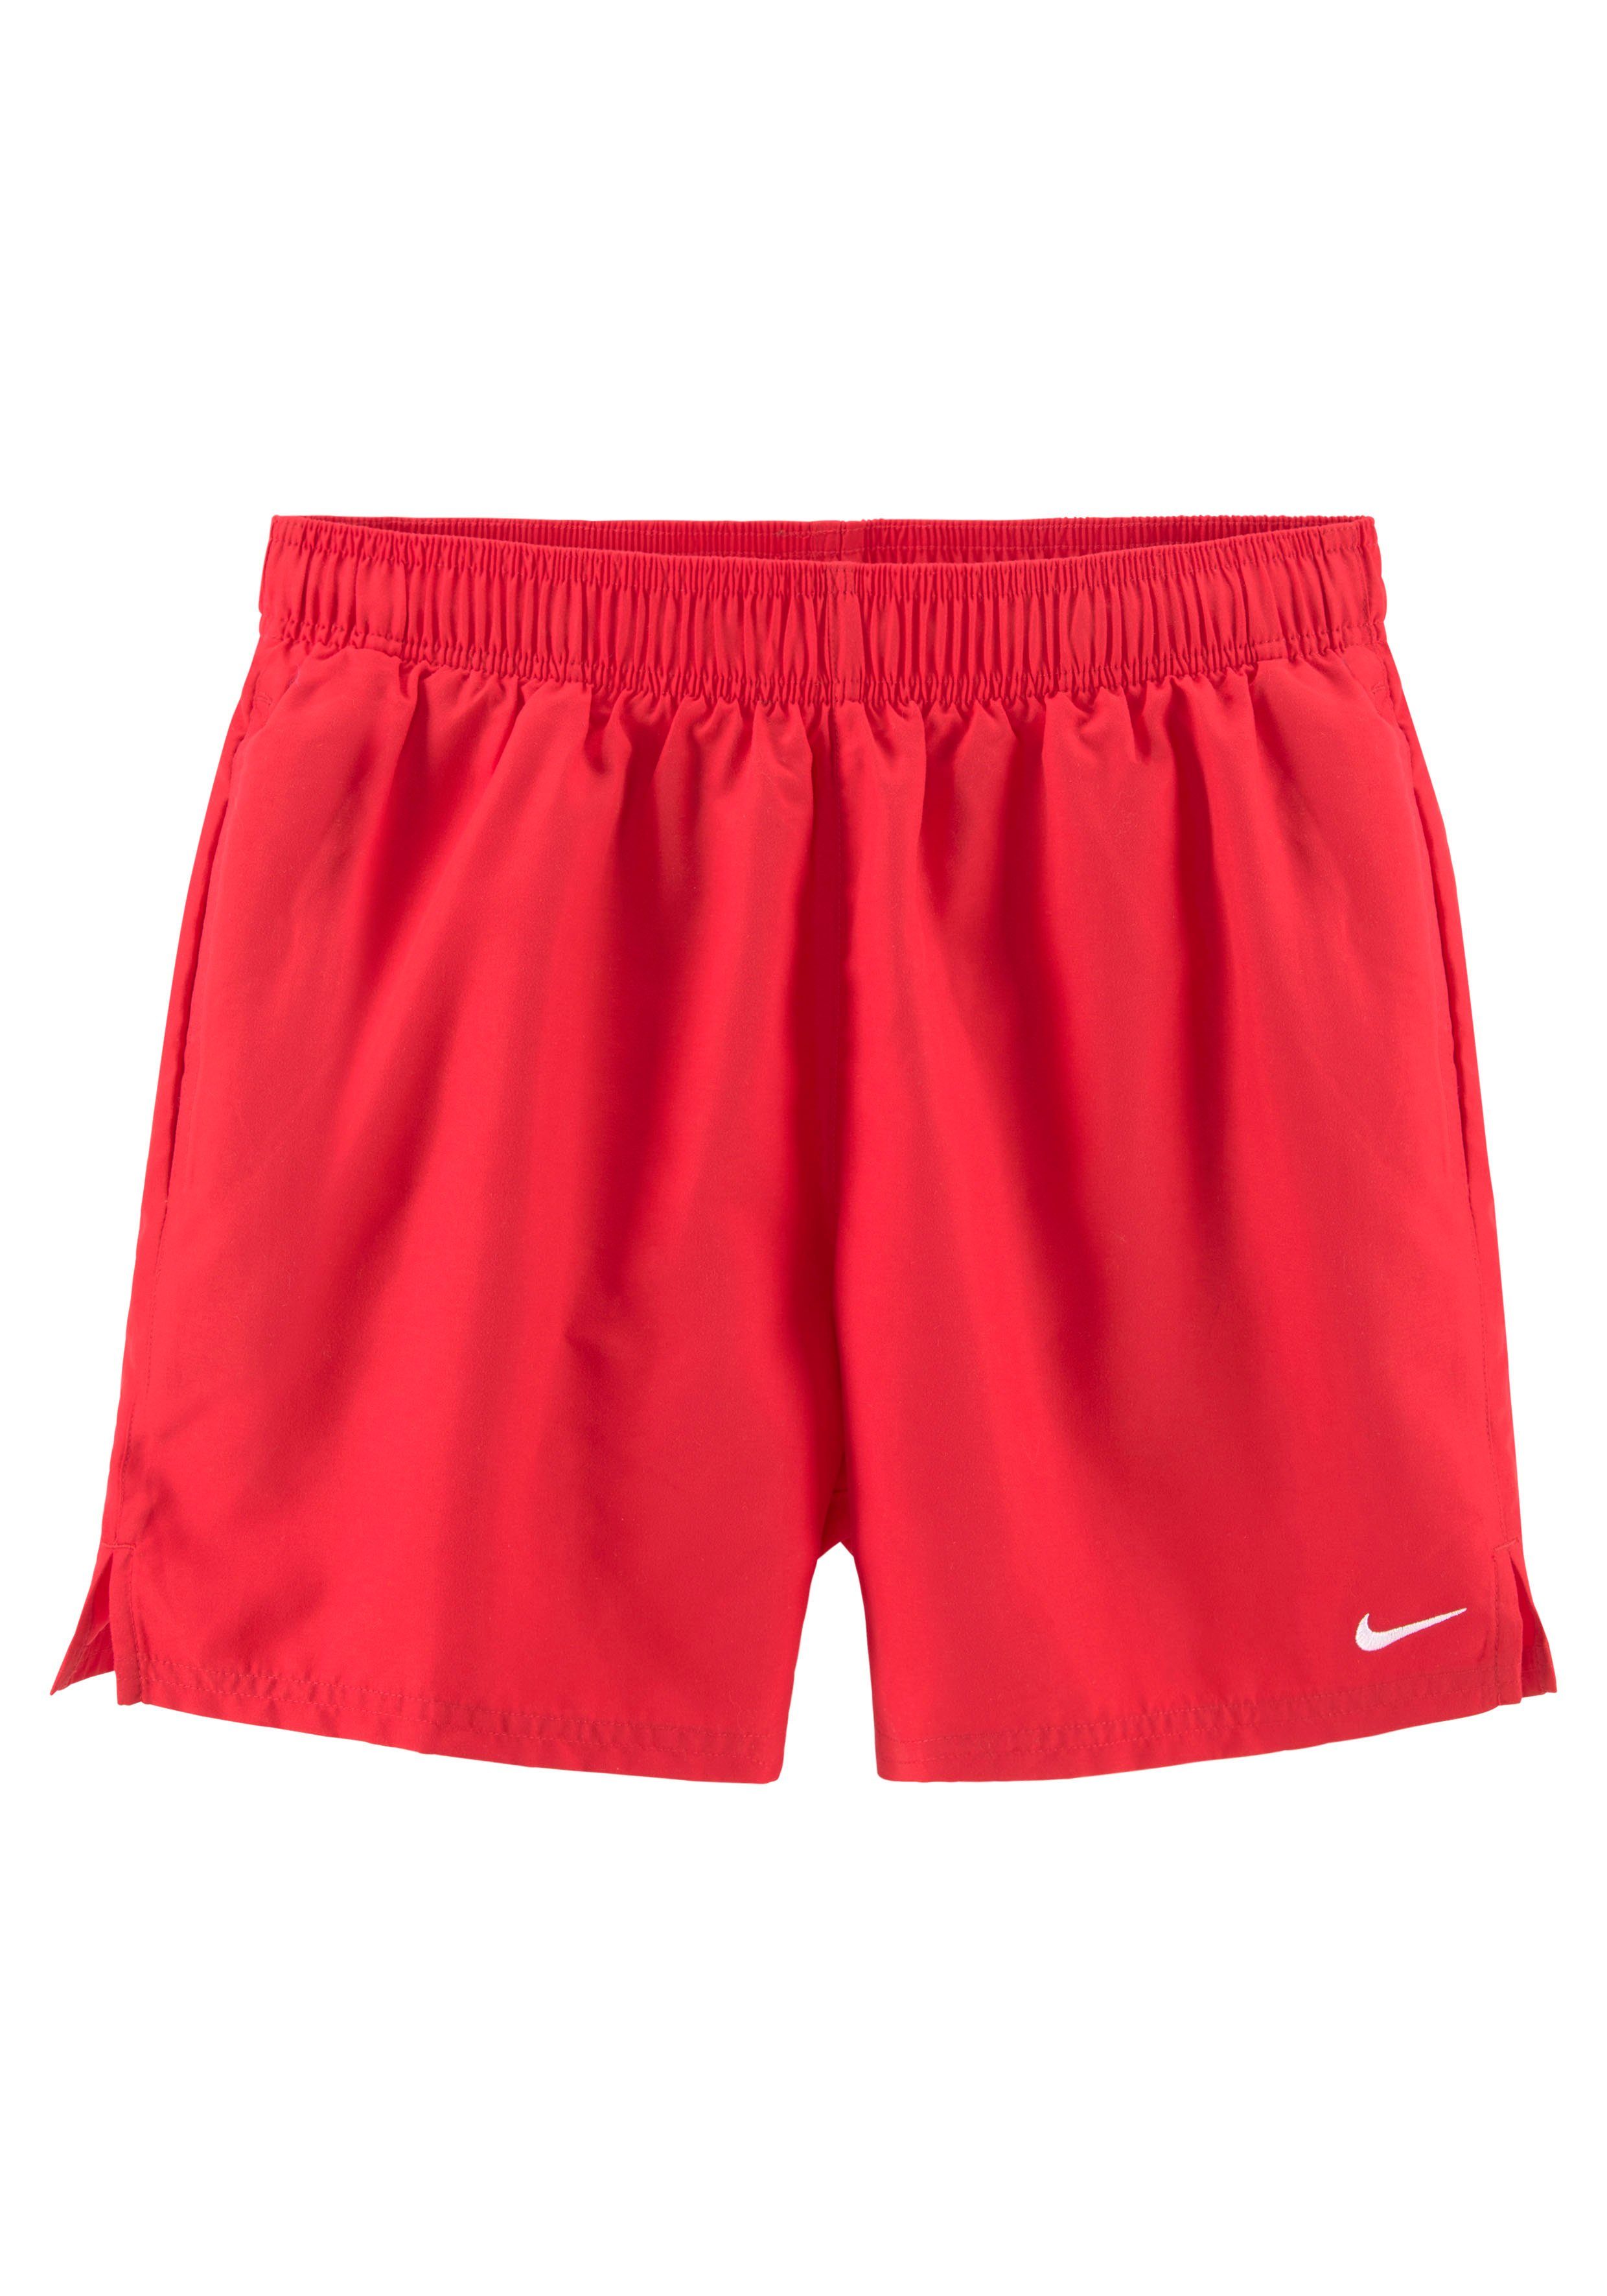 Nike zwemshort Essential rood